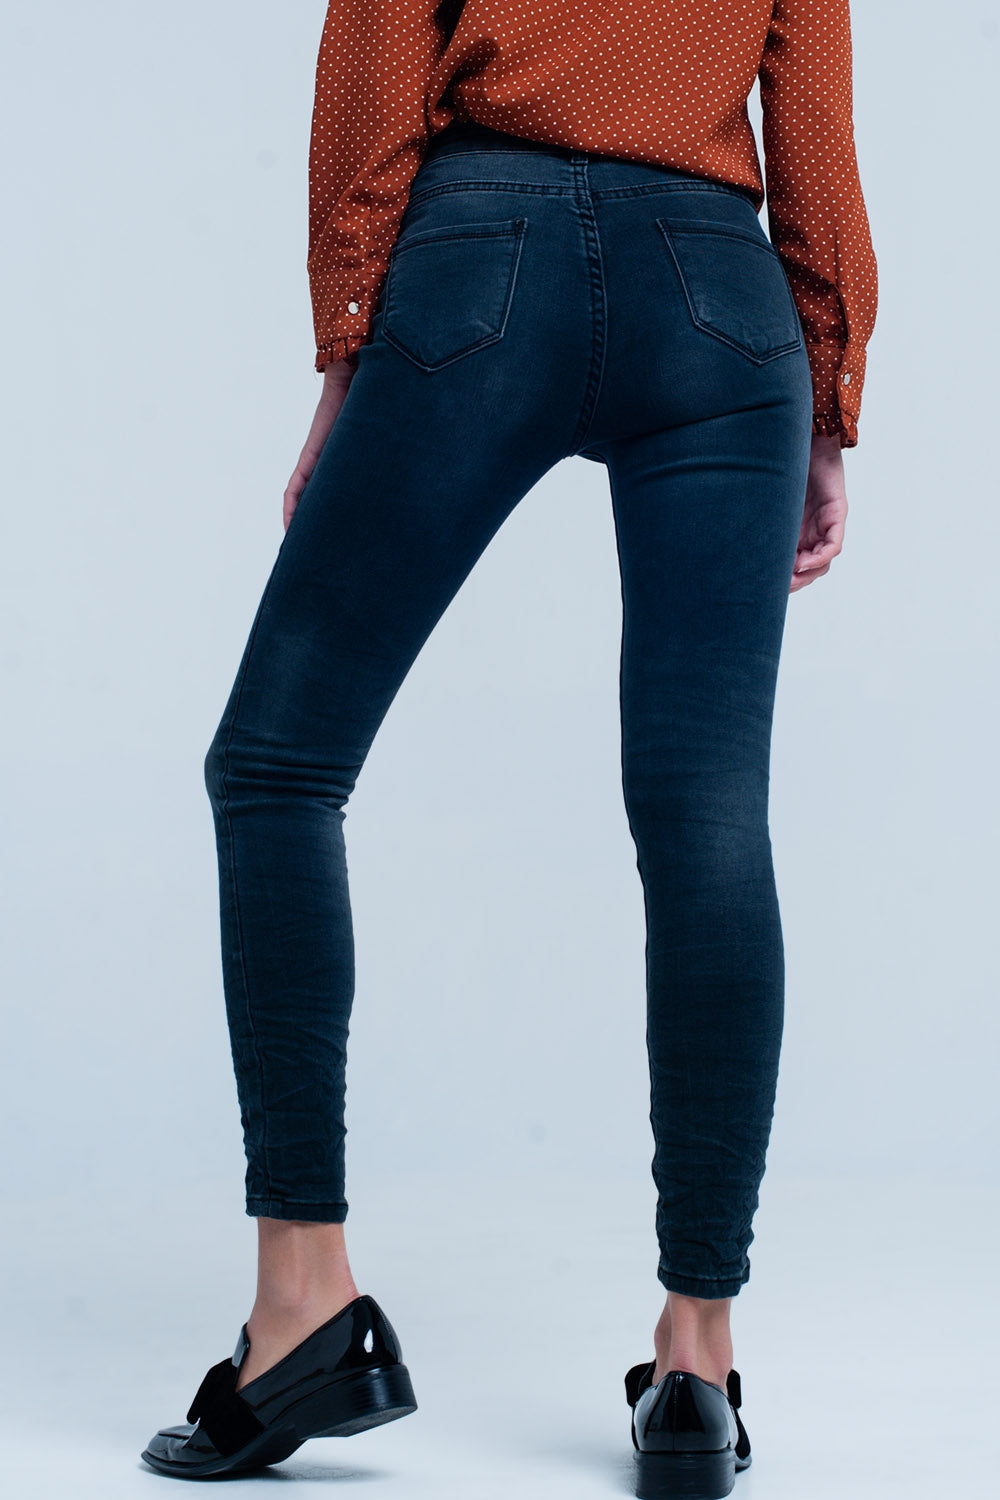 Black wrinkled skinny high-waisted jeansJeans